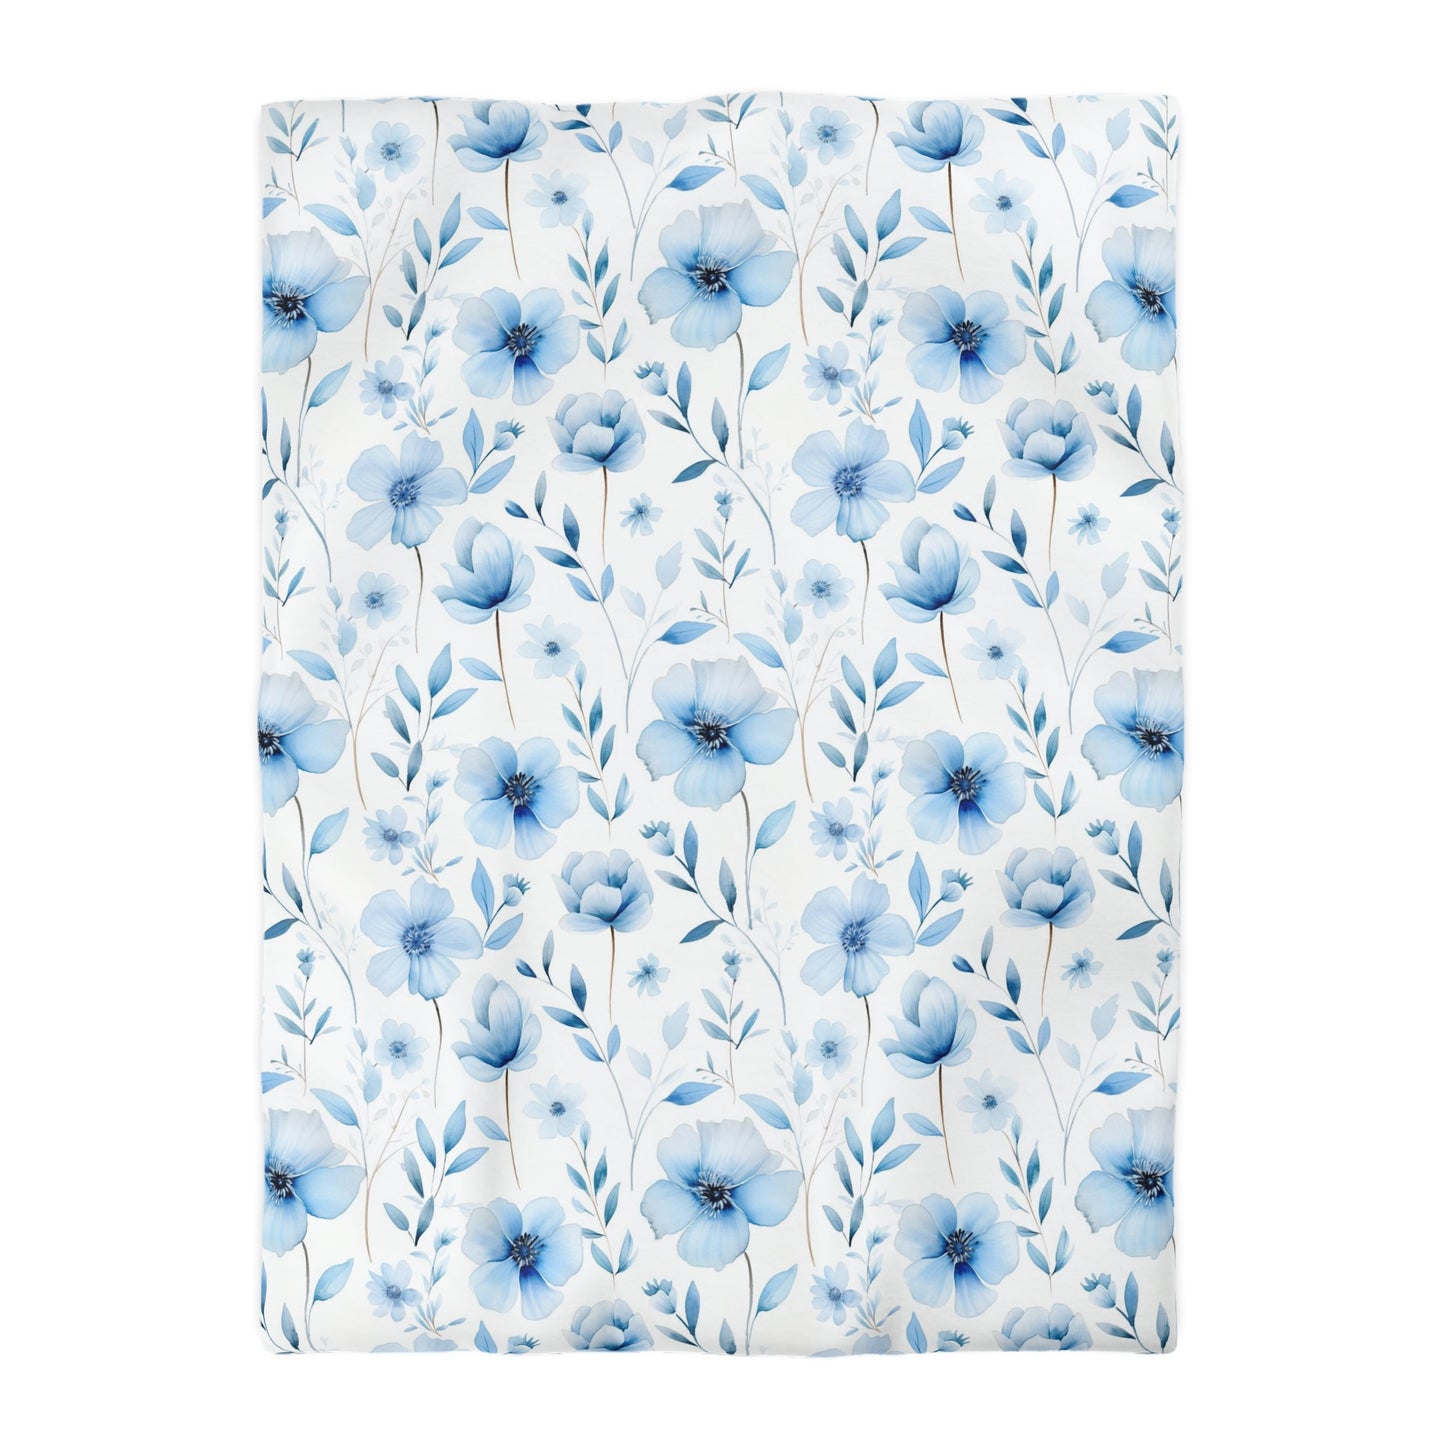 Blue Floral Duvet Cover, Wild Flowers Watercolor Bedding Queen King Full Twin XL Microfiber Unique Designer Bed Quilt Bedroom Decor